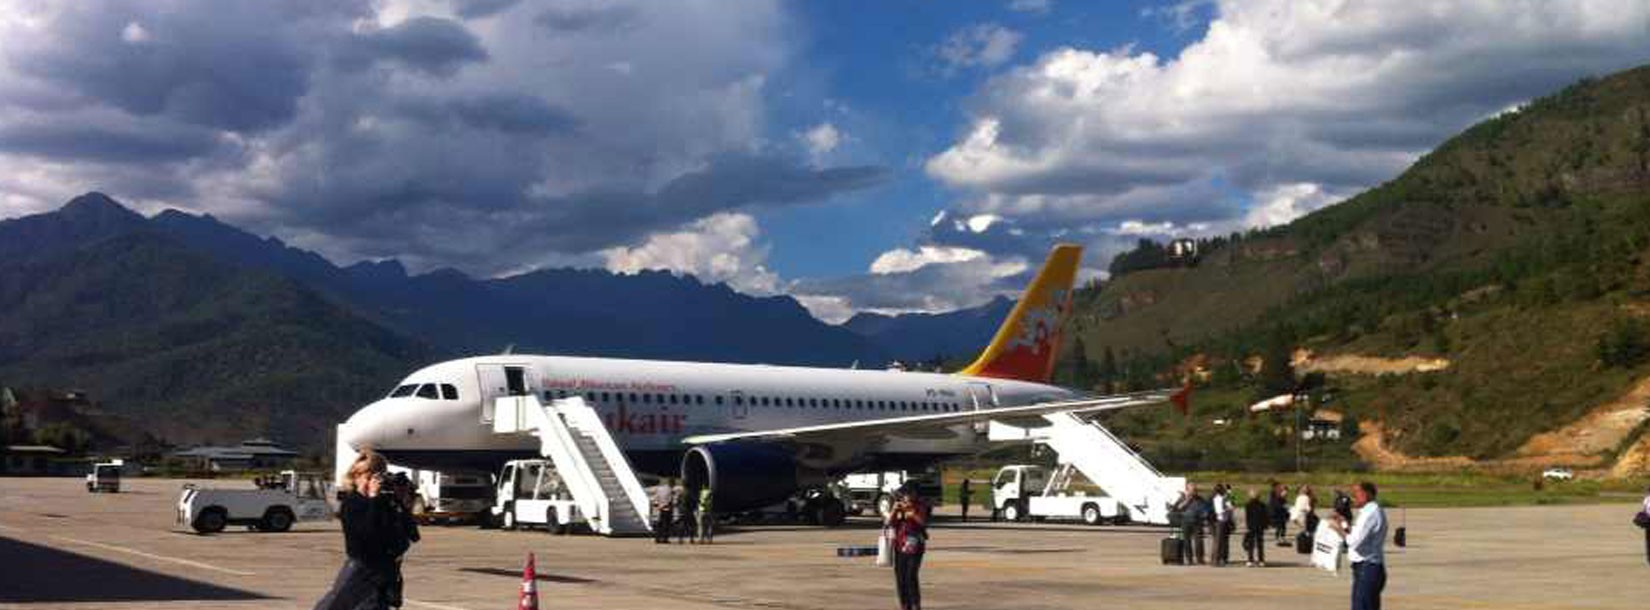 Airport of Bhutan